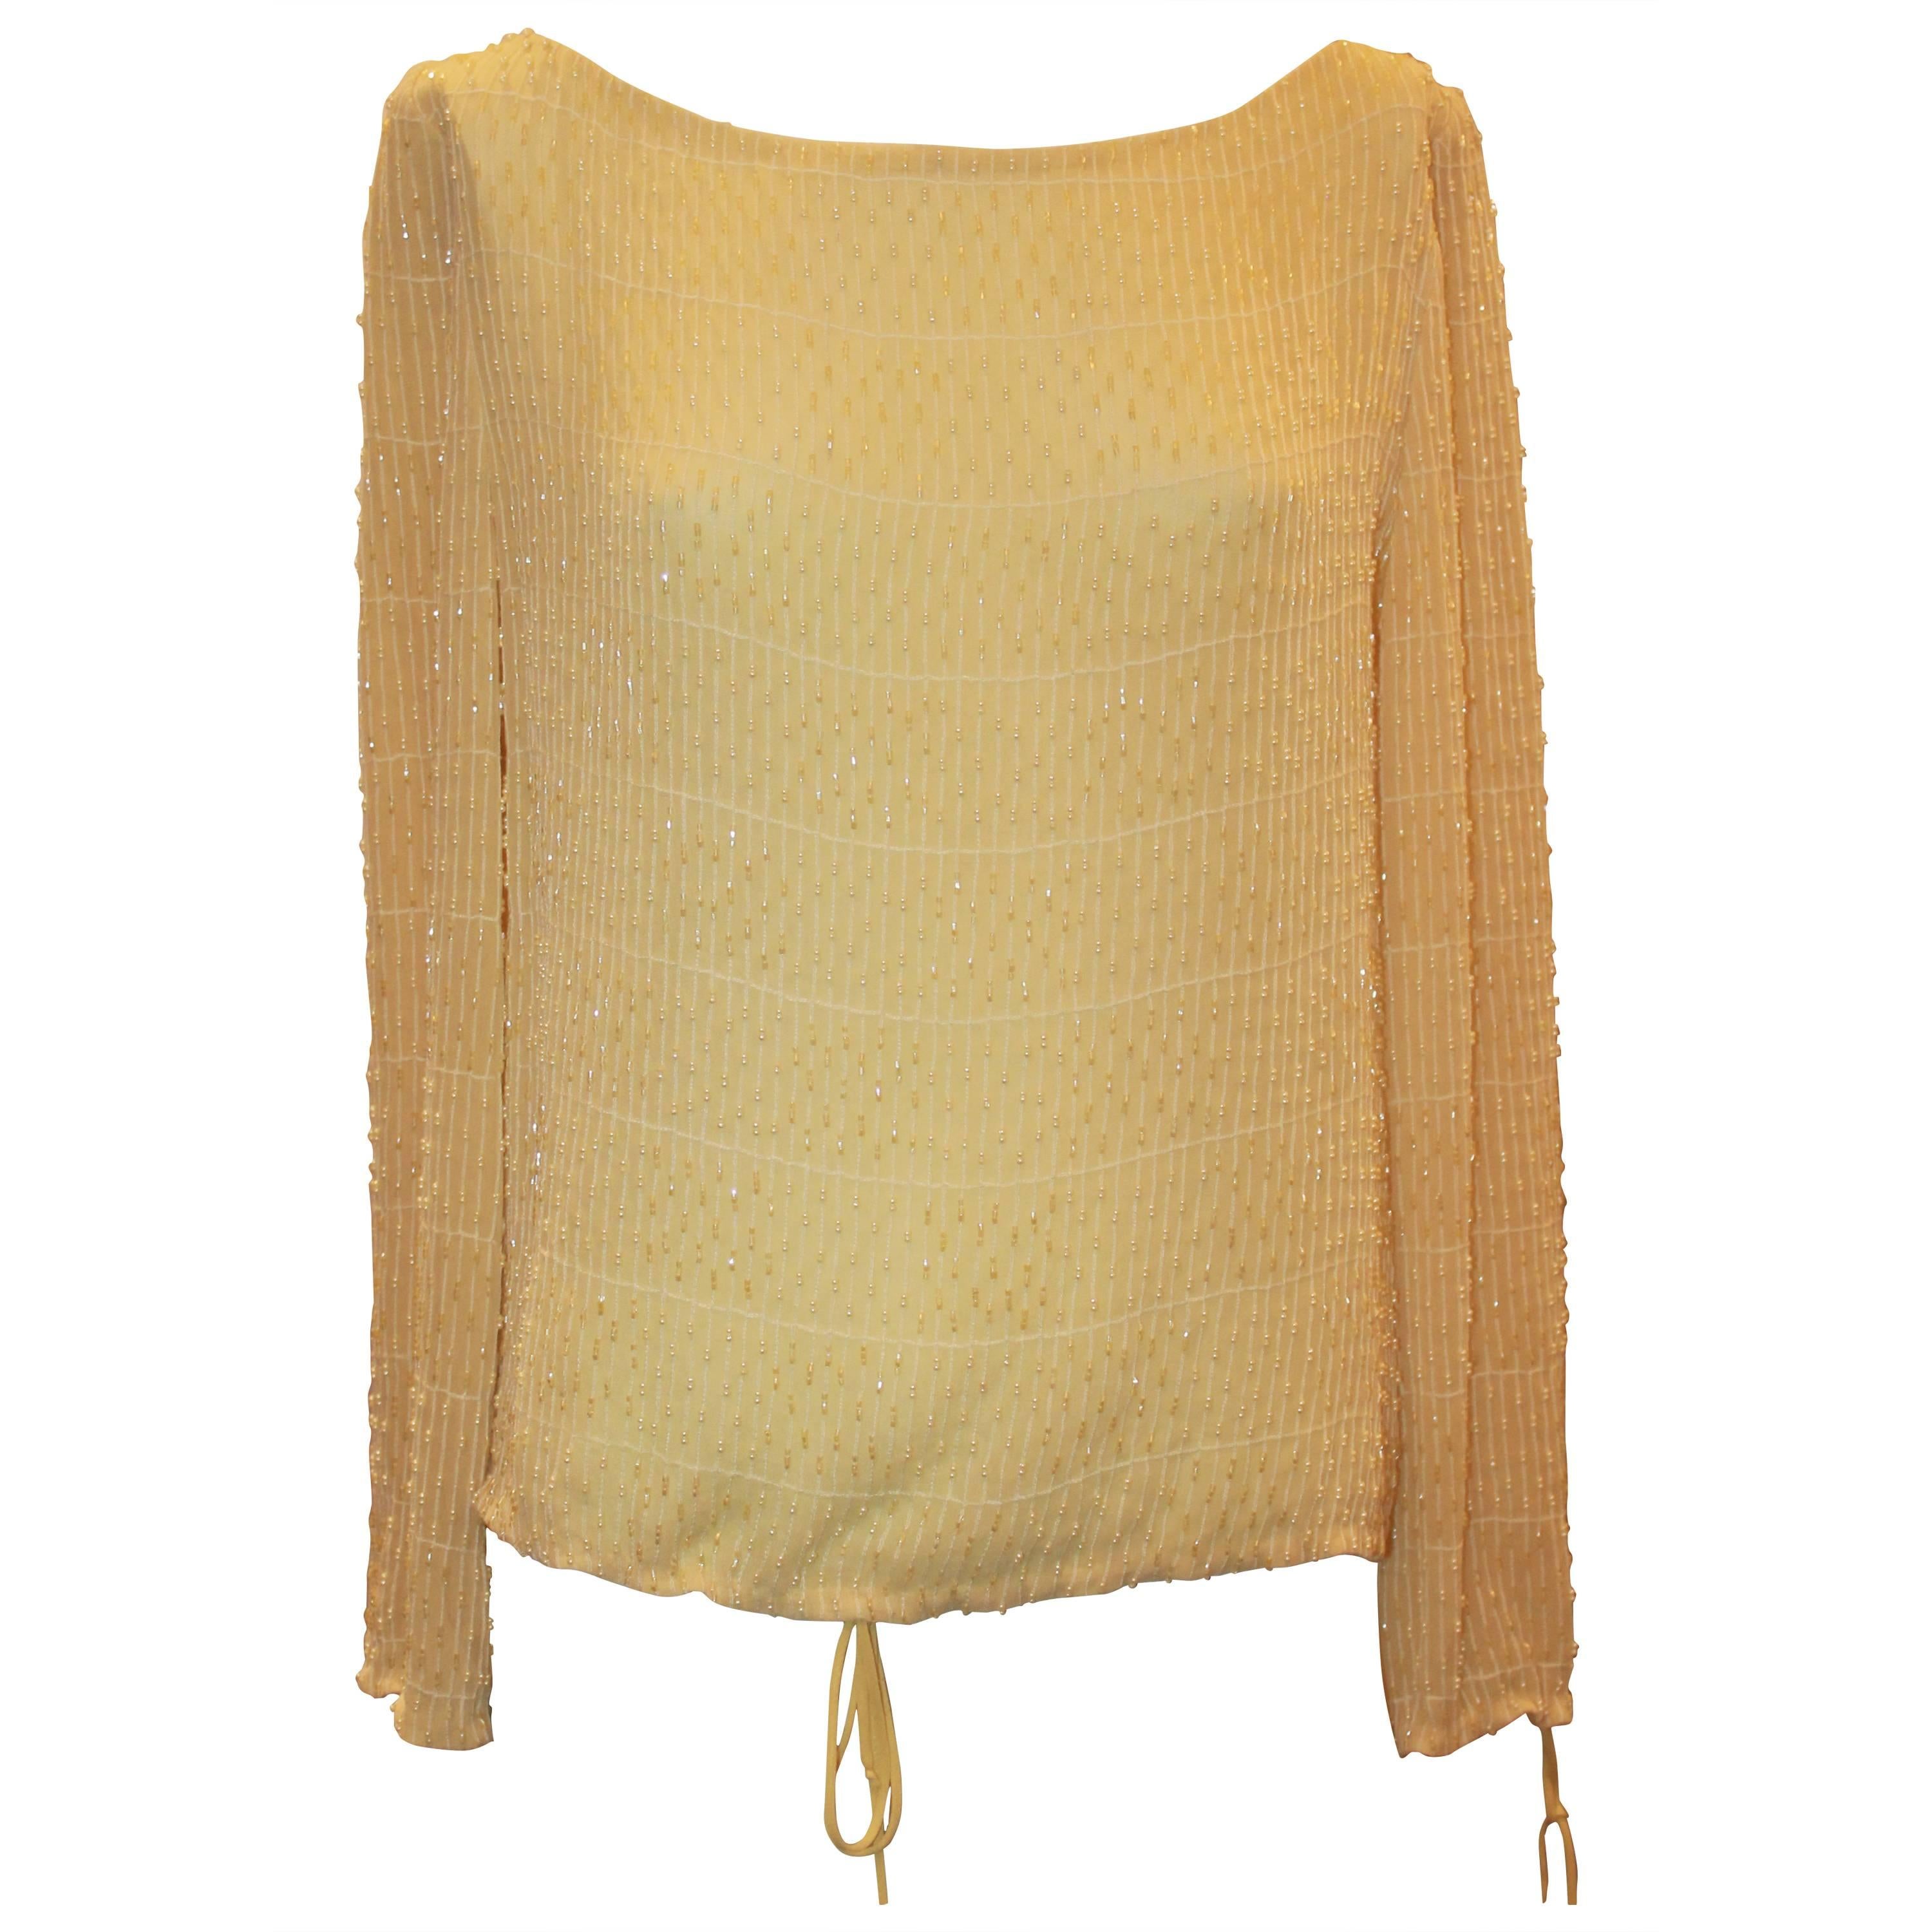 Badgley Mischka Pale Yellow Silk Chiffon Long Sleeve Top w/ Beading - 4